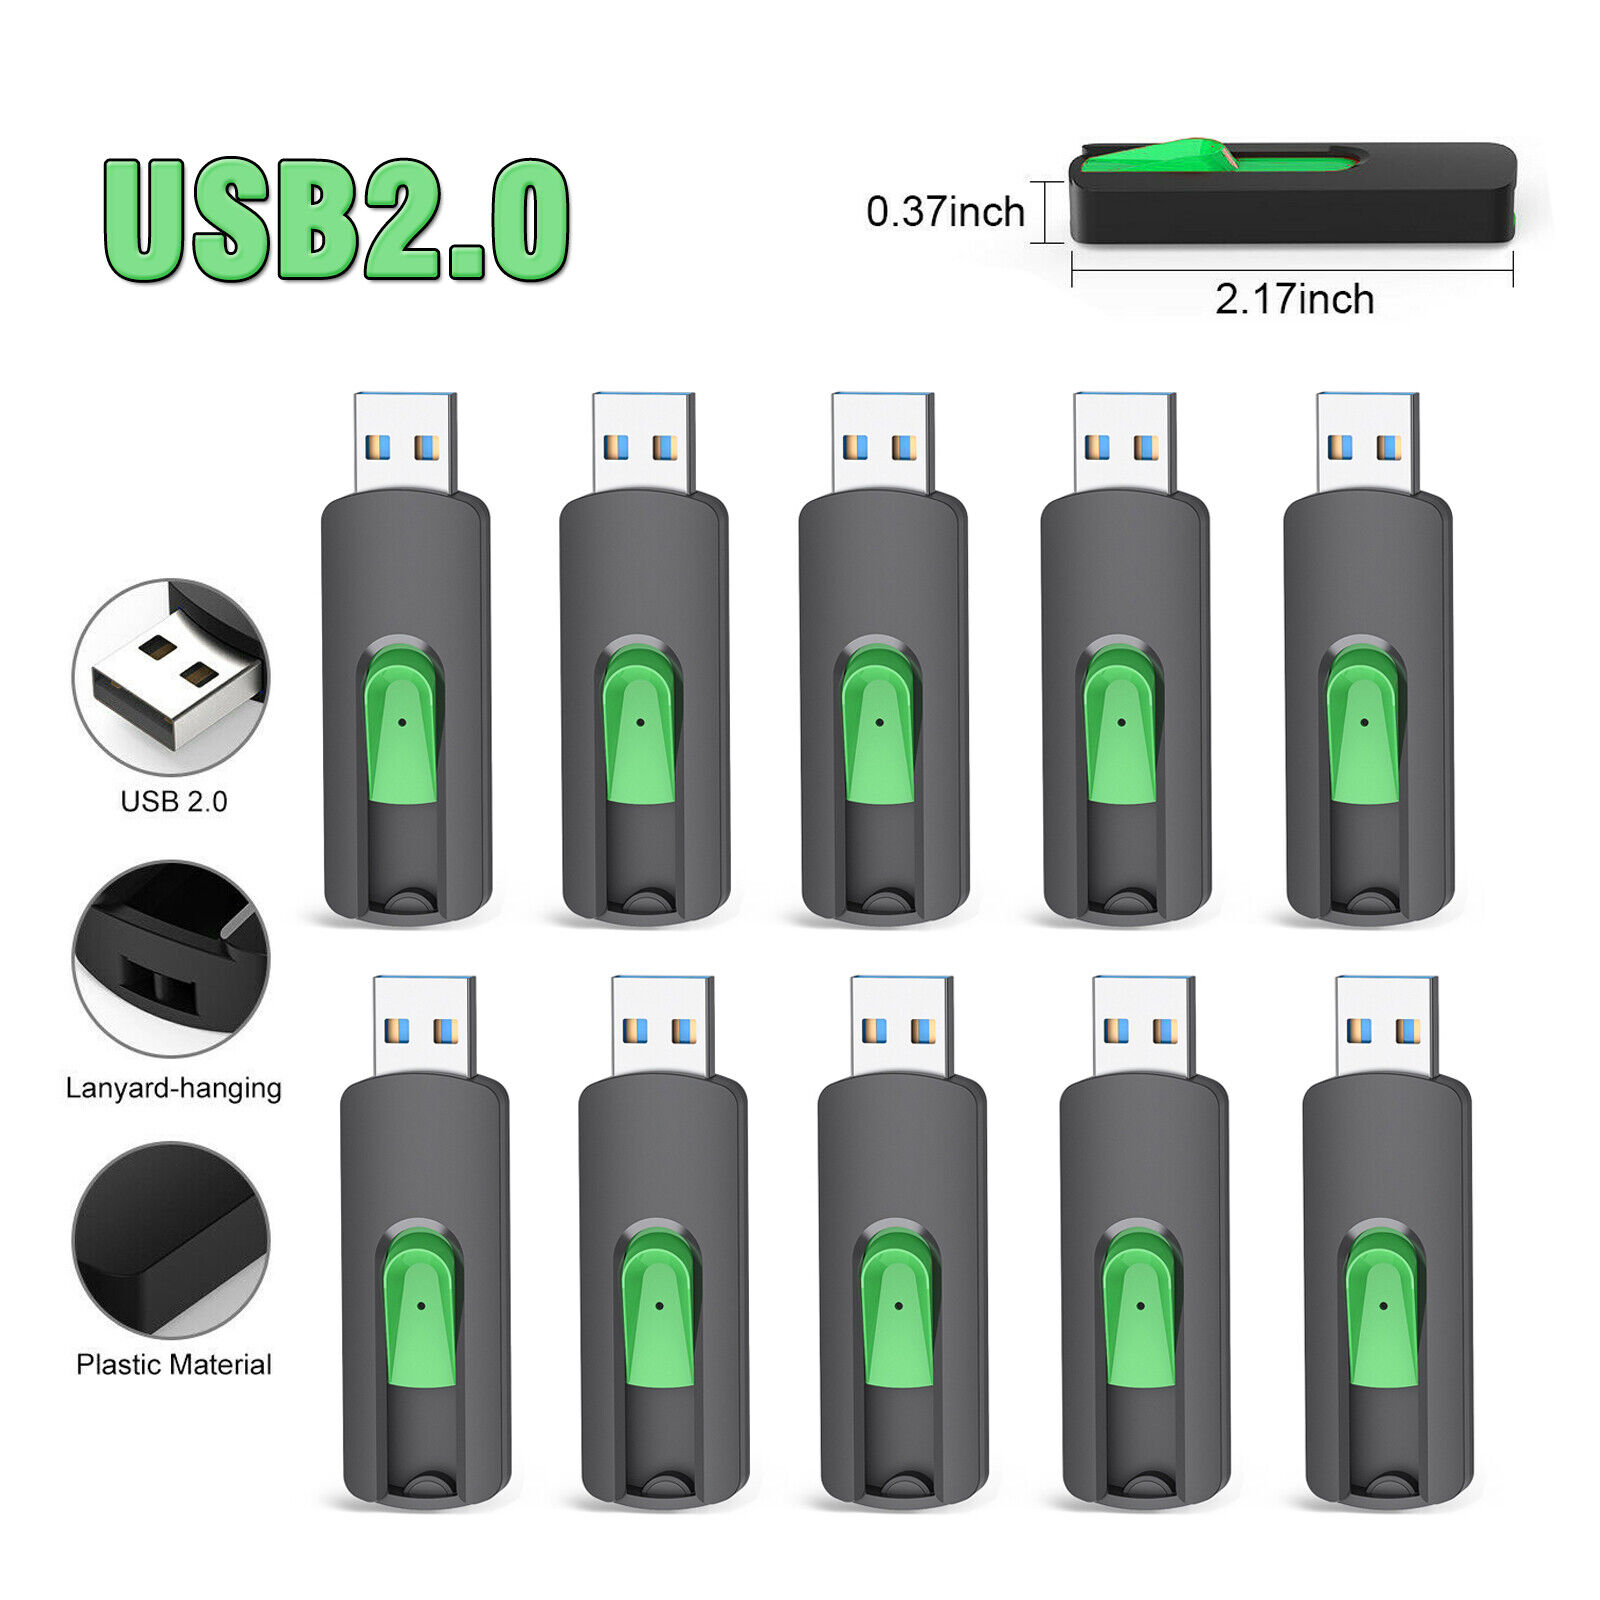 32/64/128GB USB 2.0 Flash Drive Memory Stick Thumb Drives Data Storage Wholesale